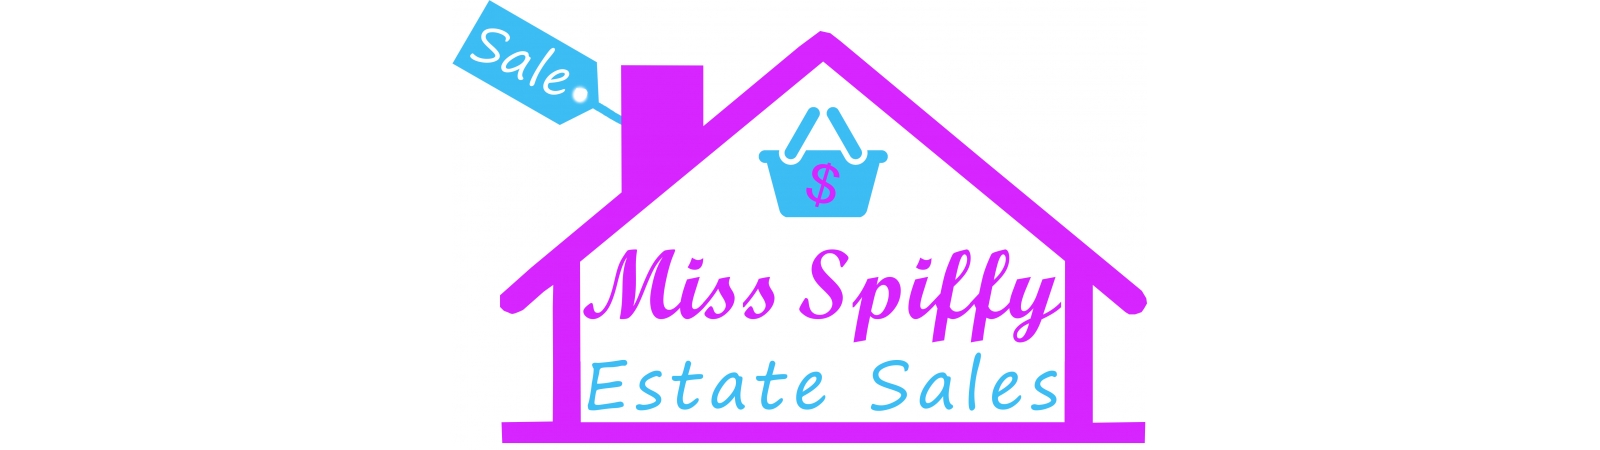 Miss Spiffy Estate Sales, LLC | AuctionNinja